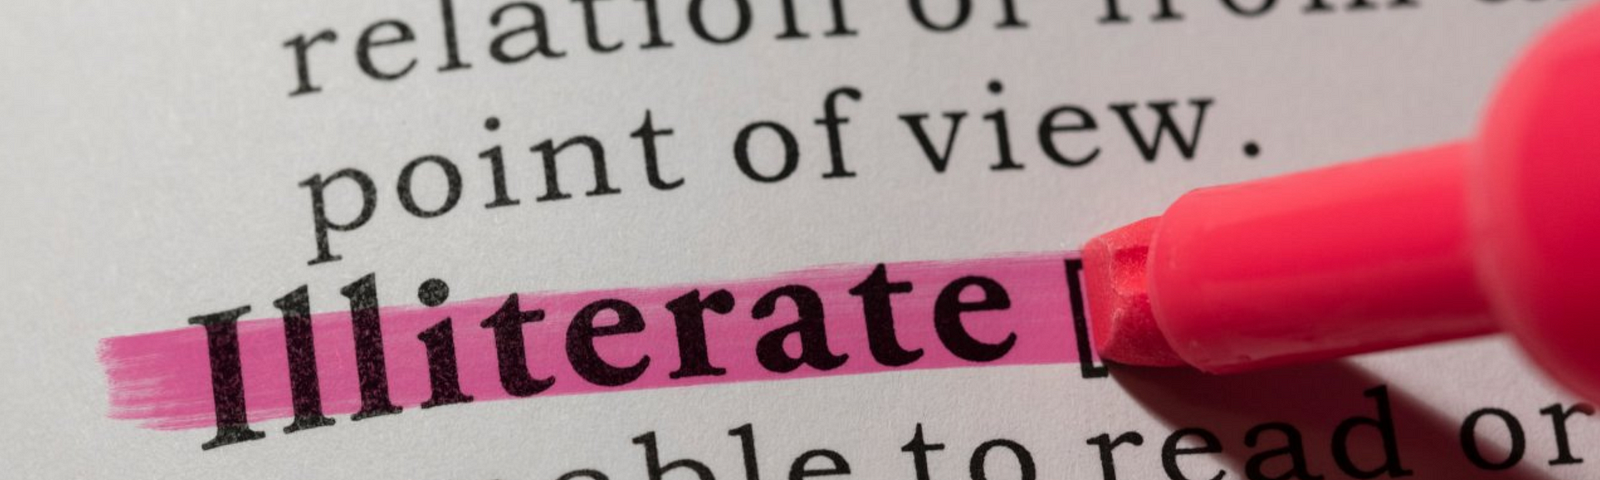 Pen highlighting the word “illiterate”